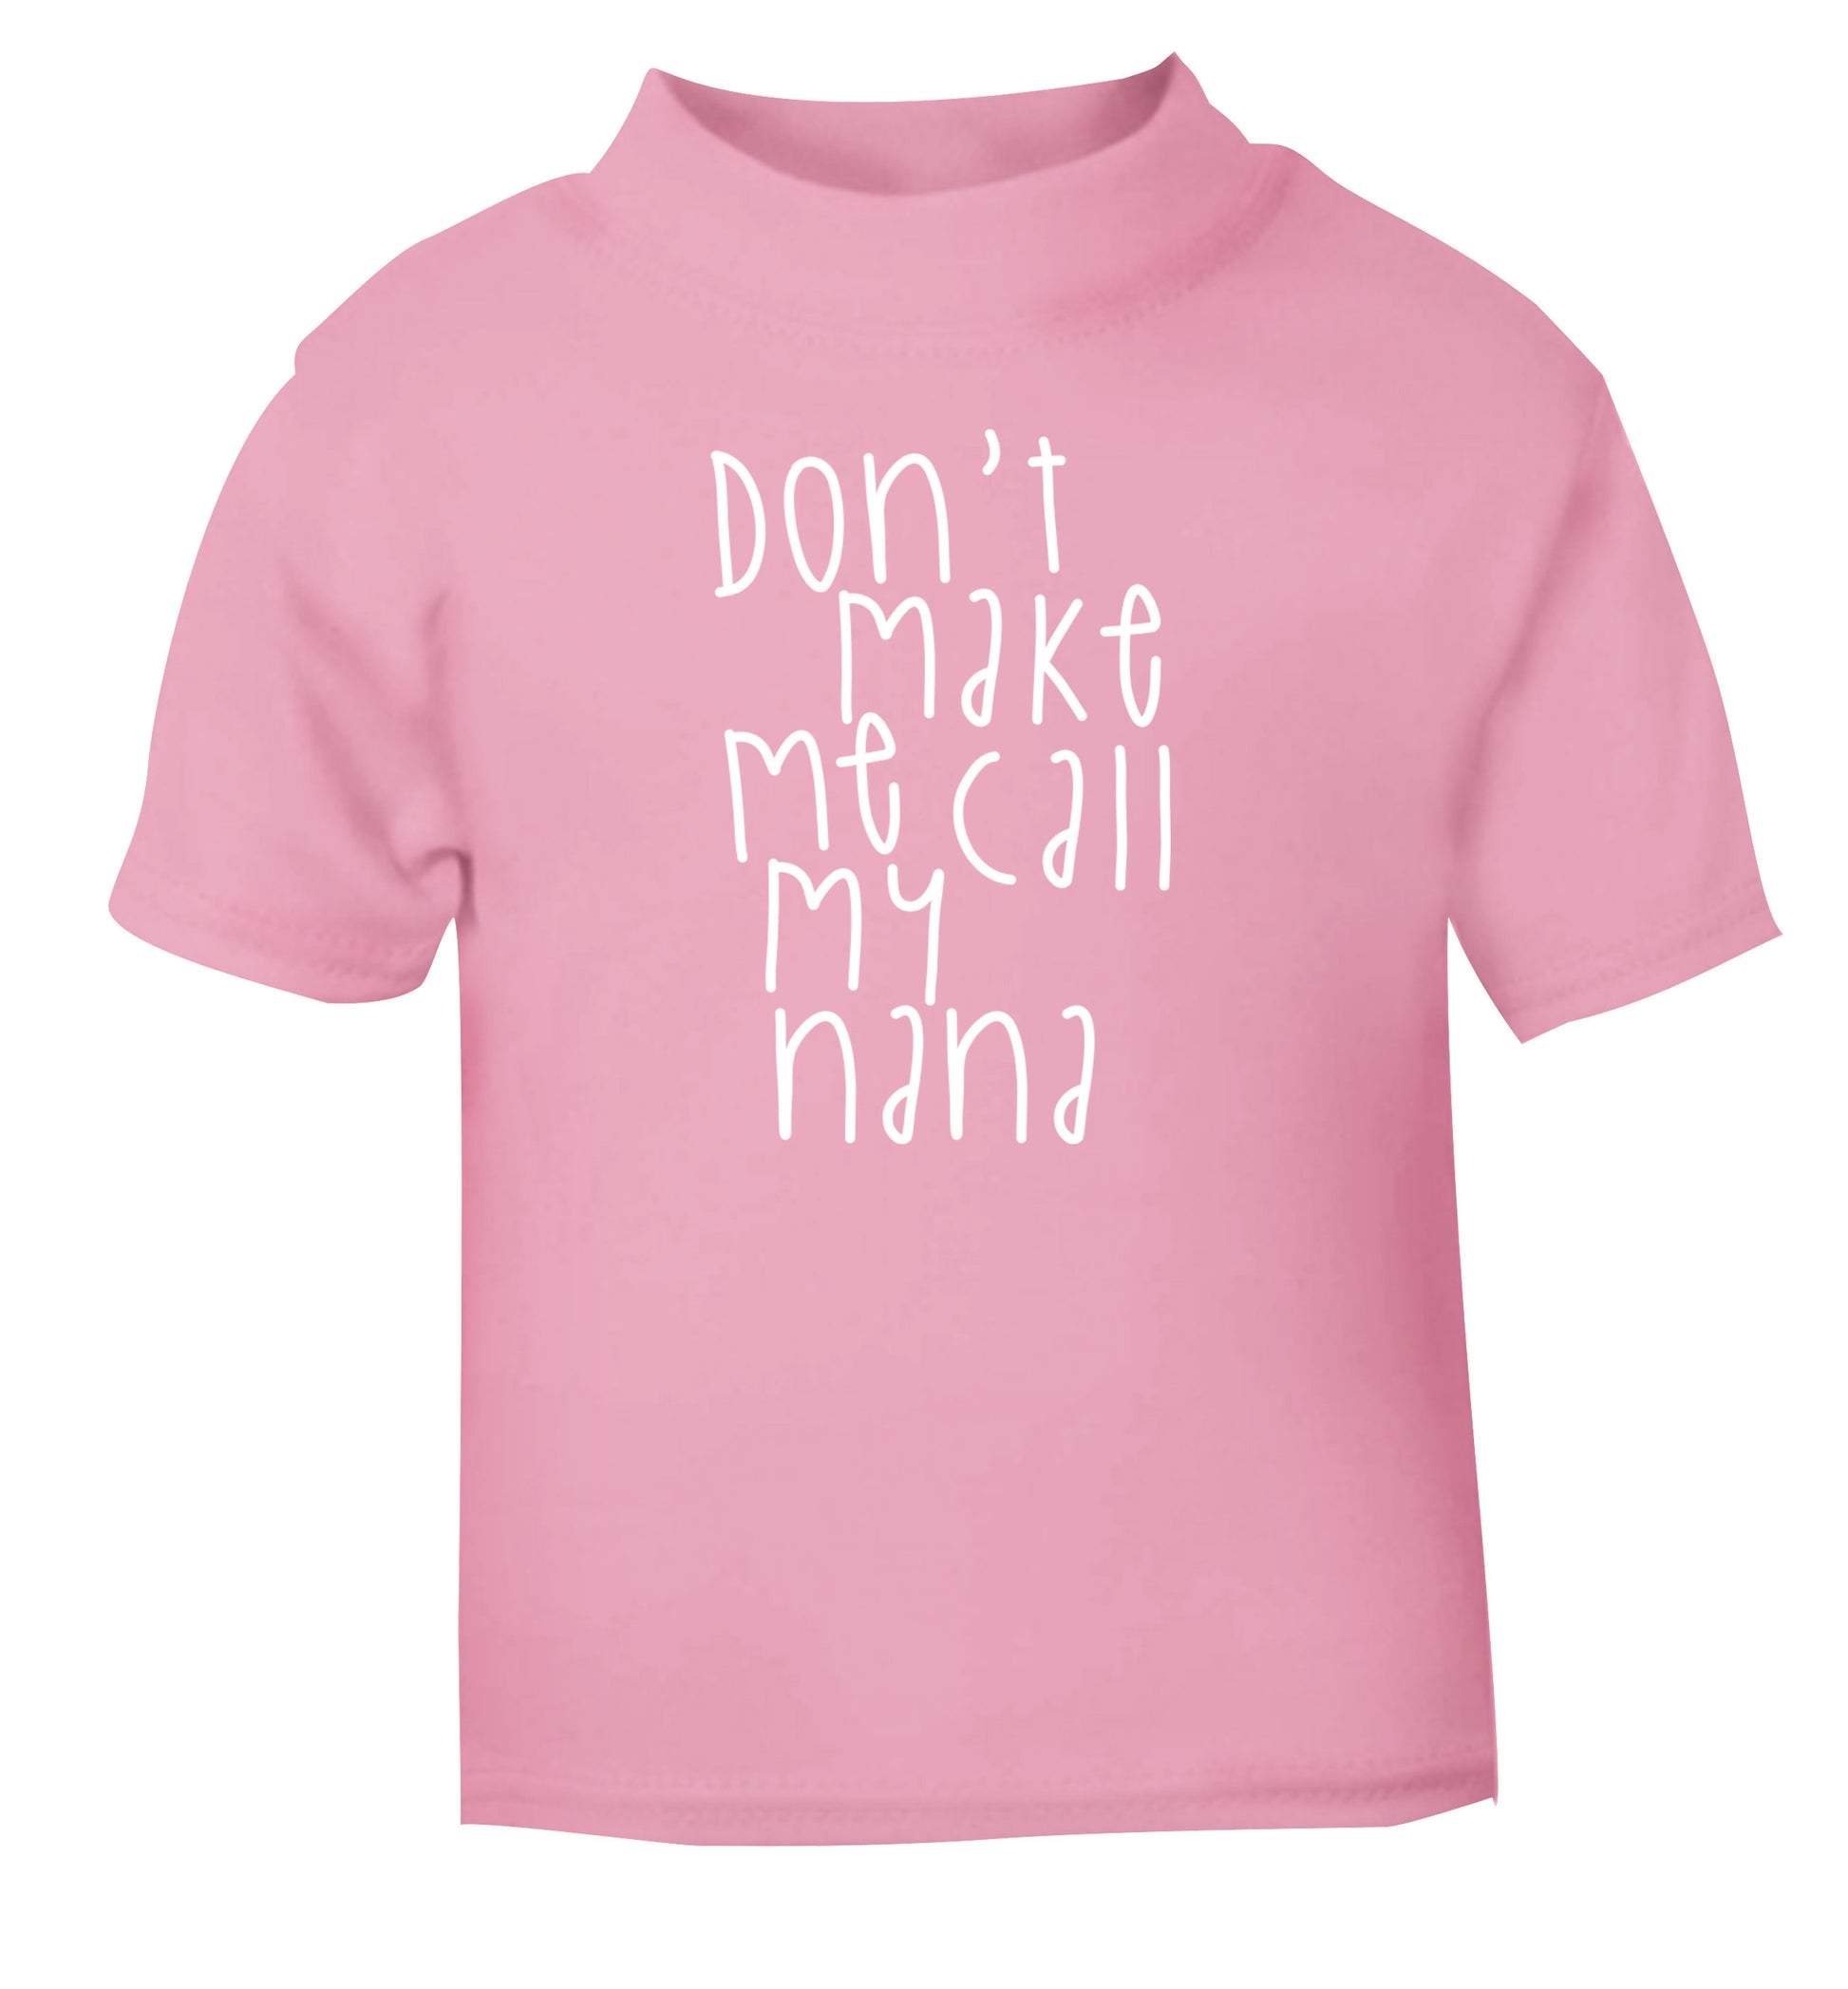 Don't make me call my nana light pink Baby Toddler Tshirt 2 Years